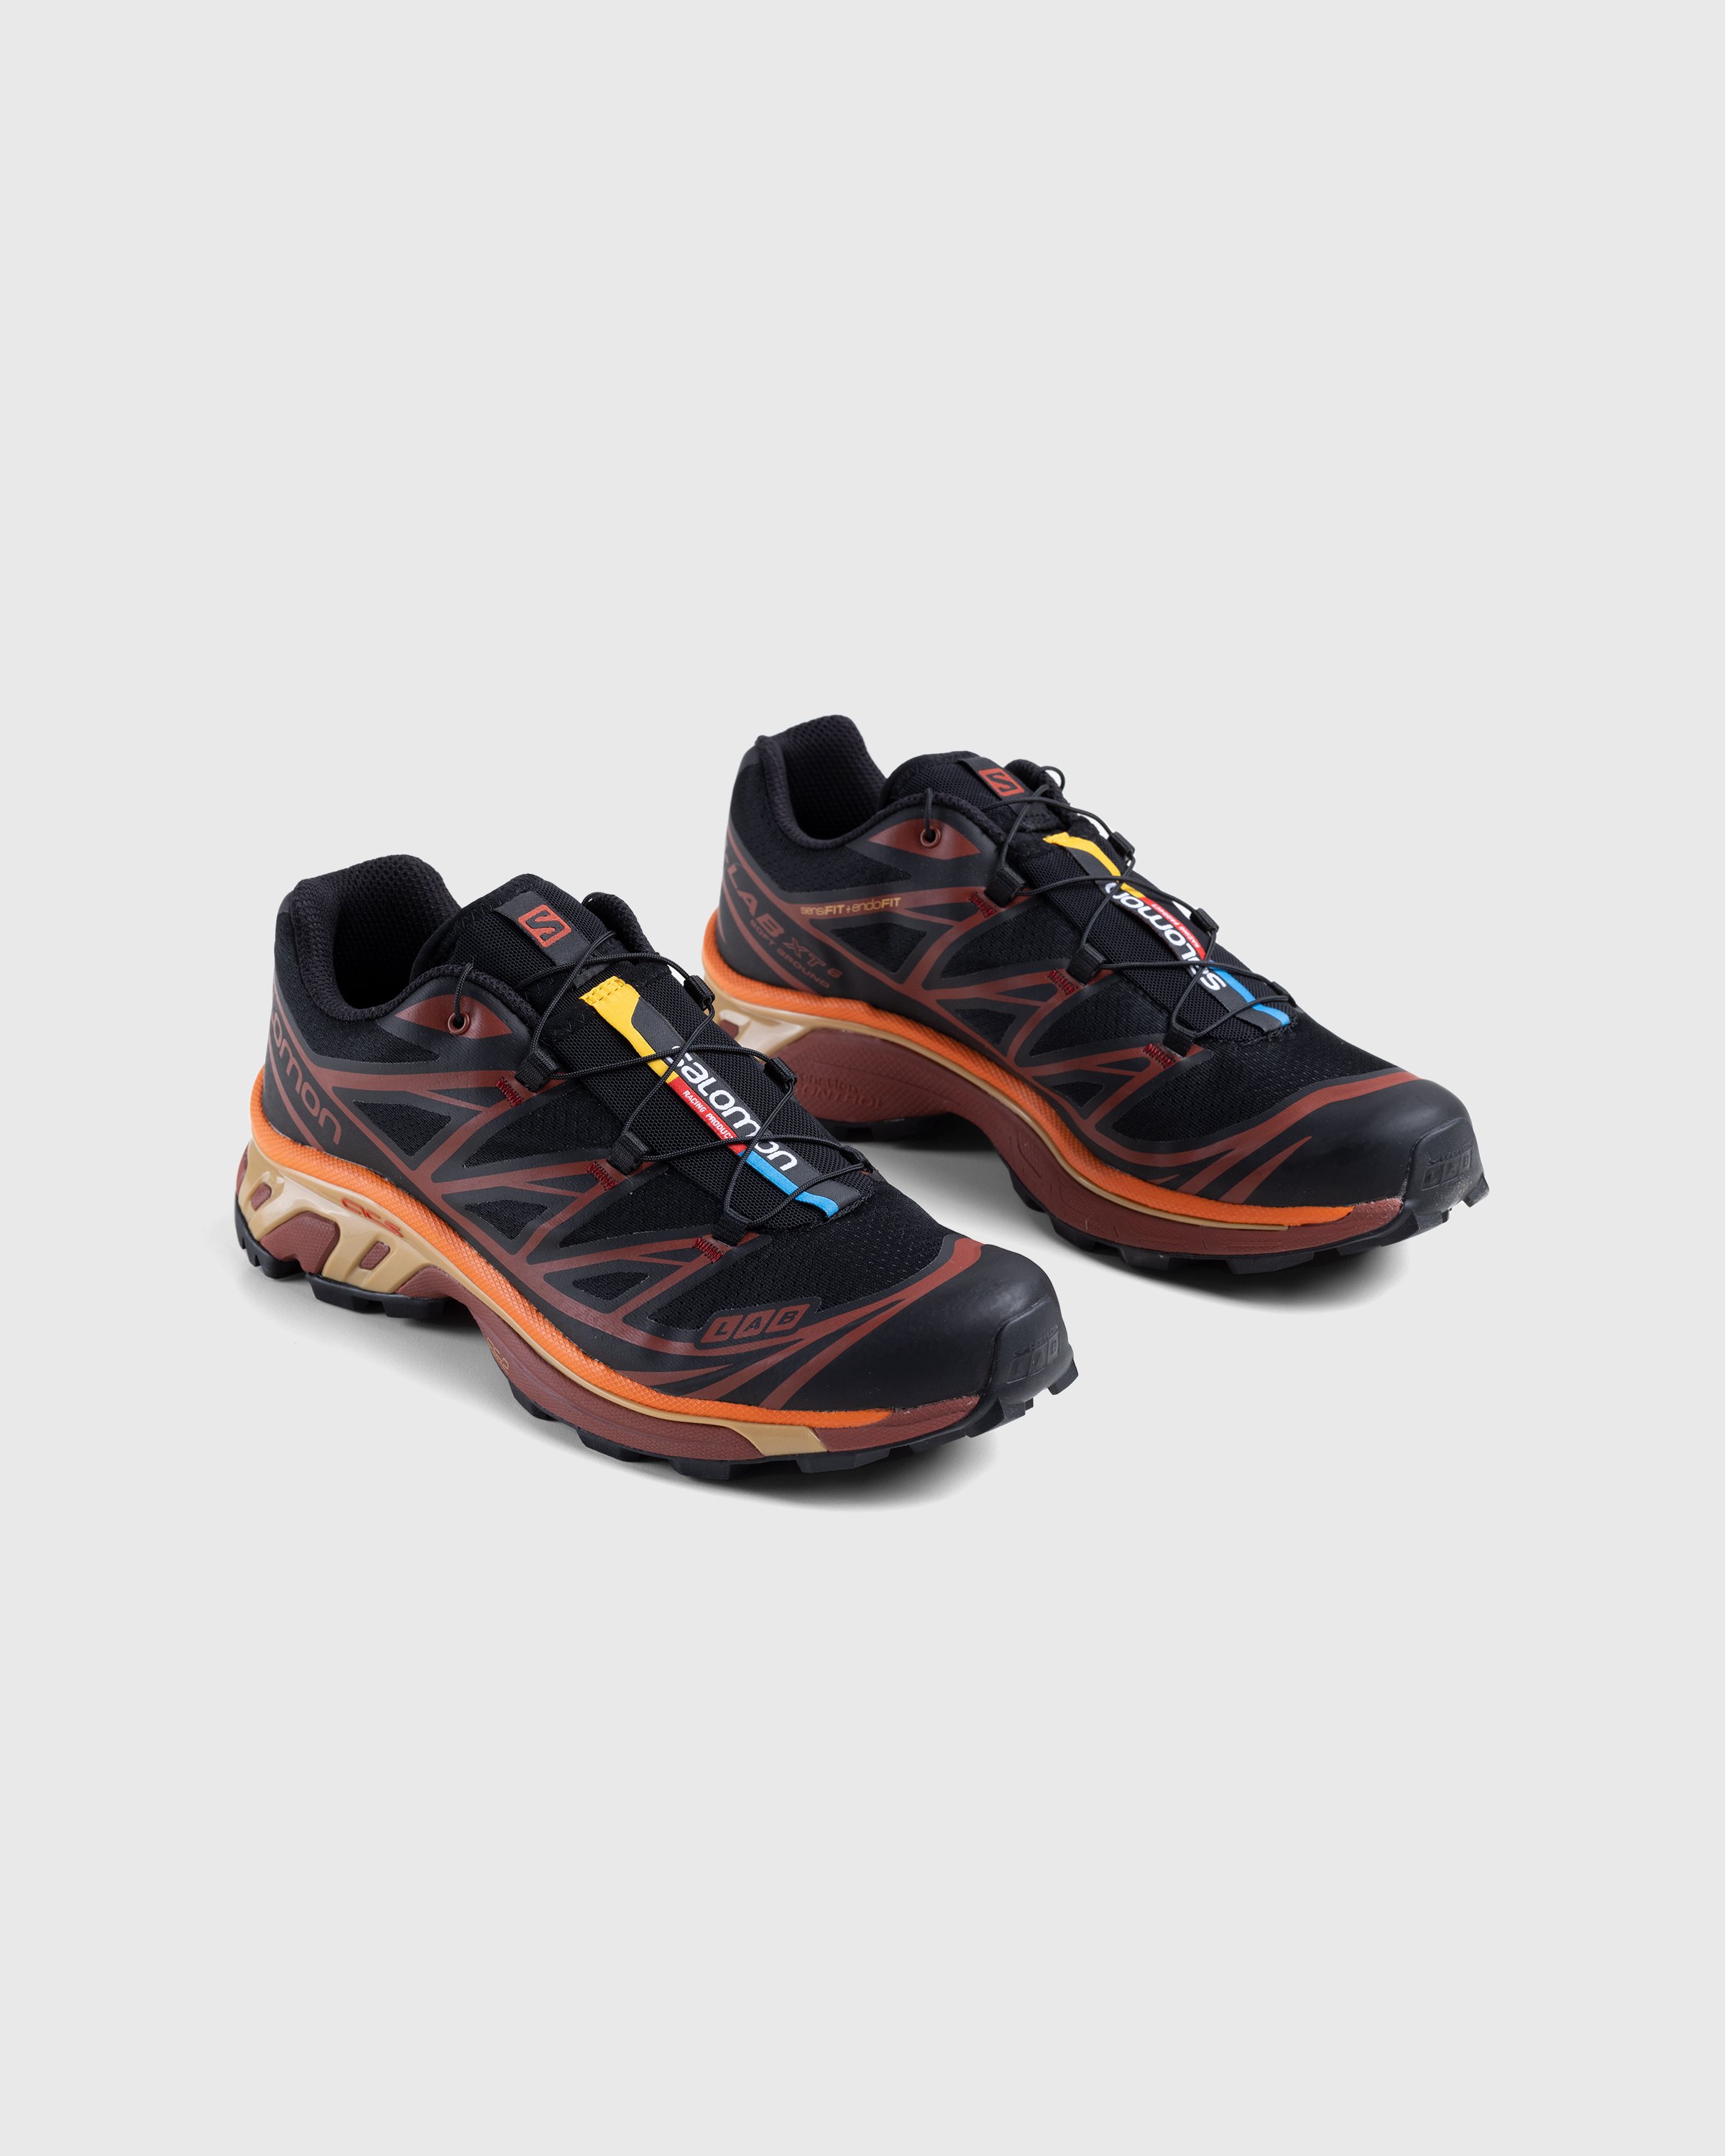 Salomon - XT-6 Black/Chocolate Plum/Vibrant Orange - Footwear - Brown - Image 3